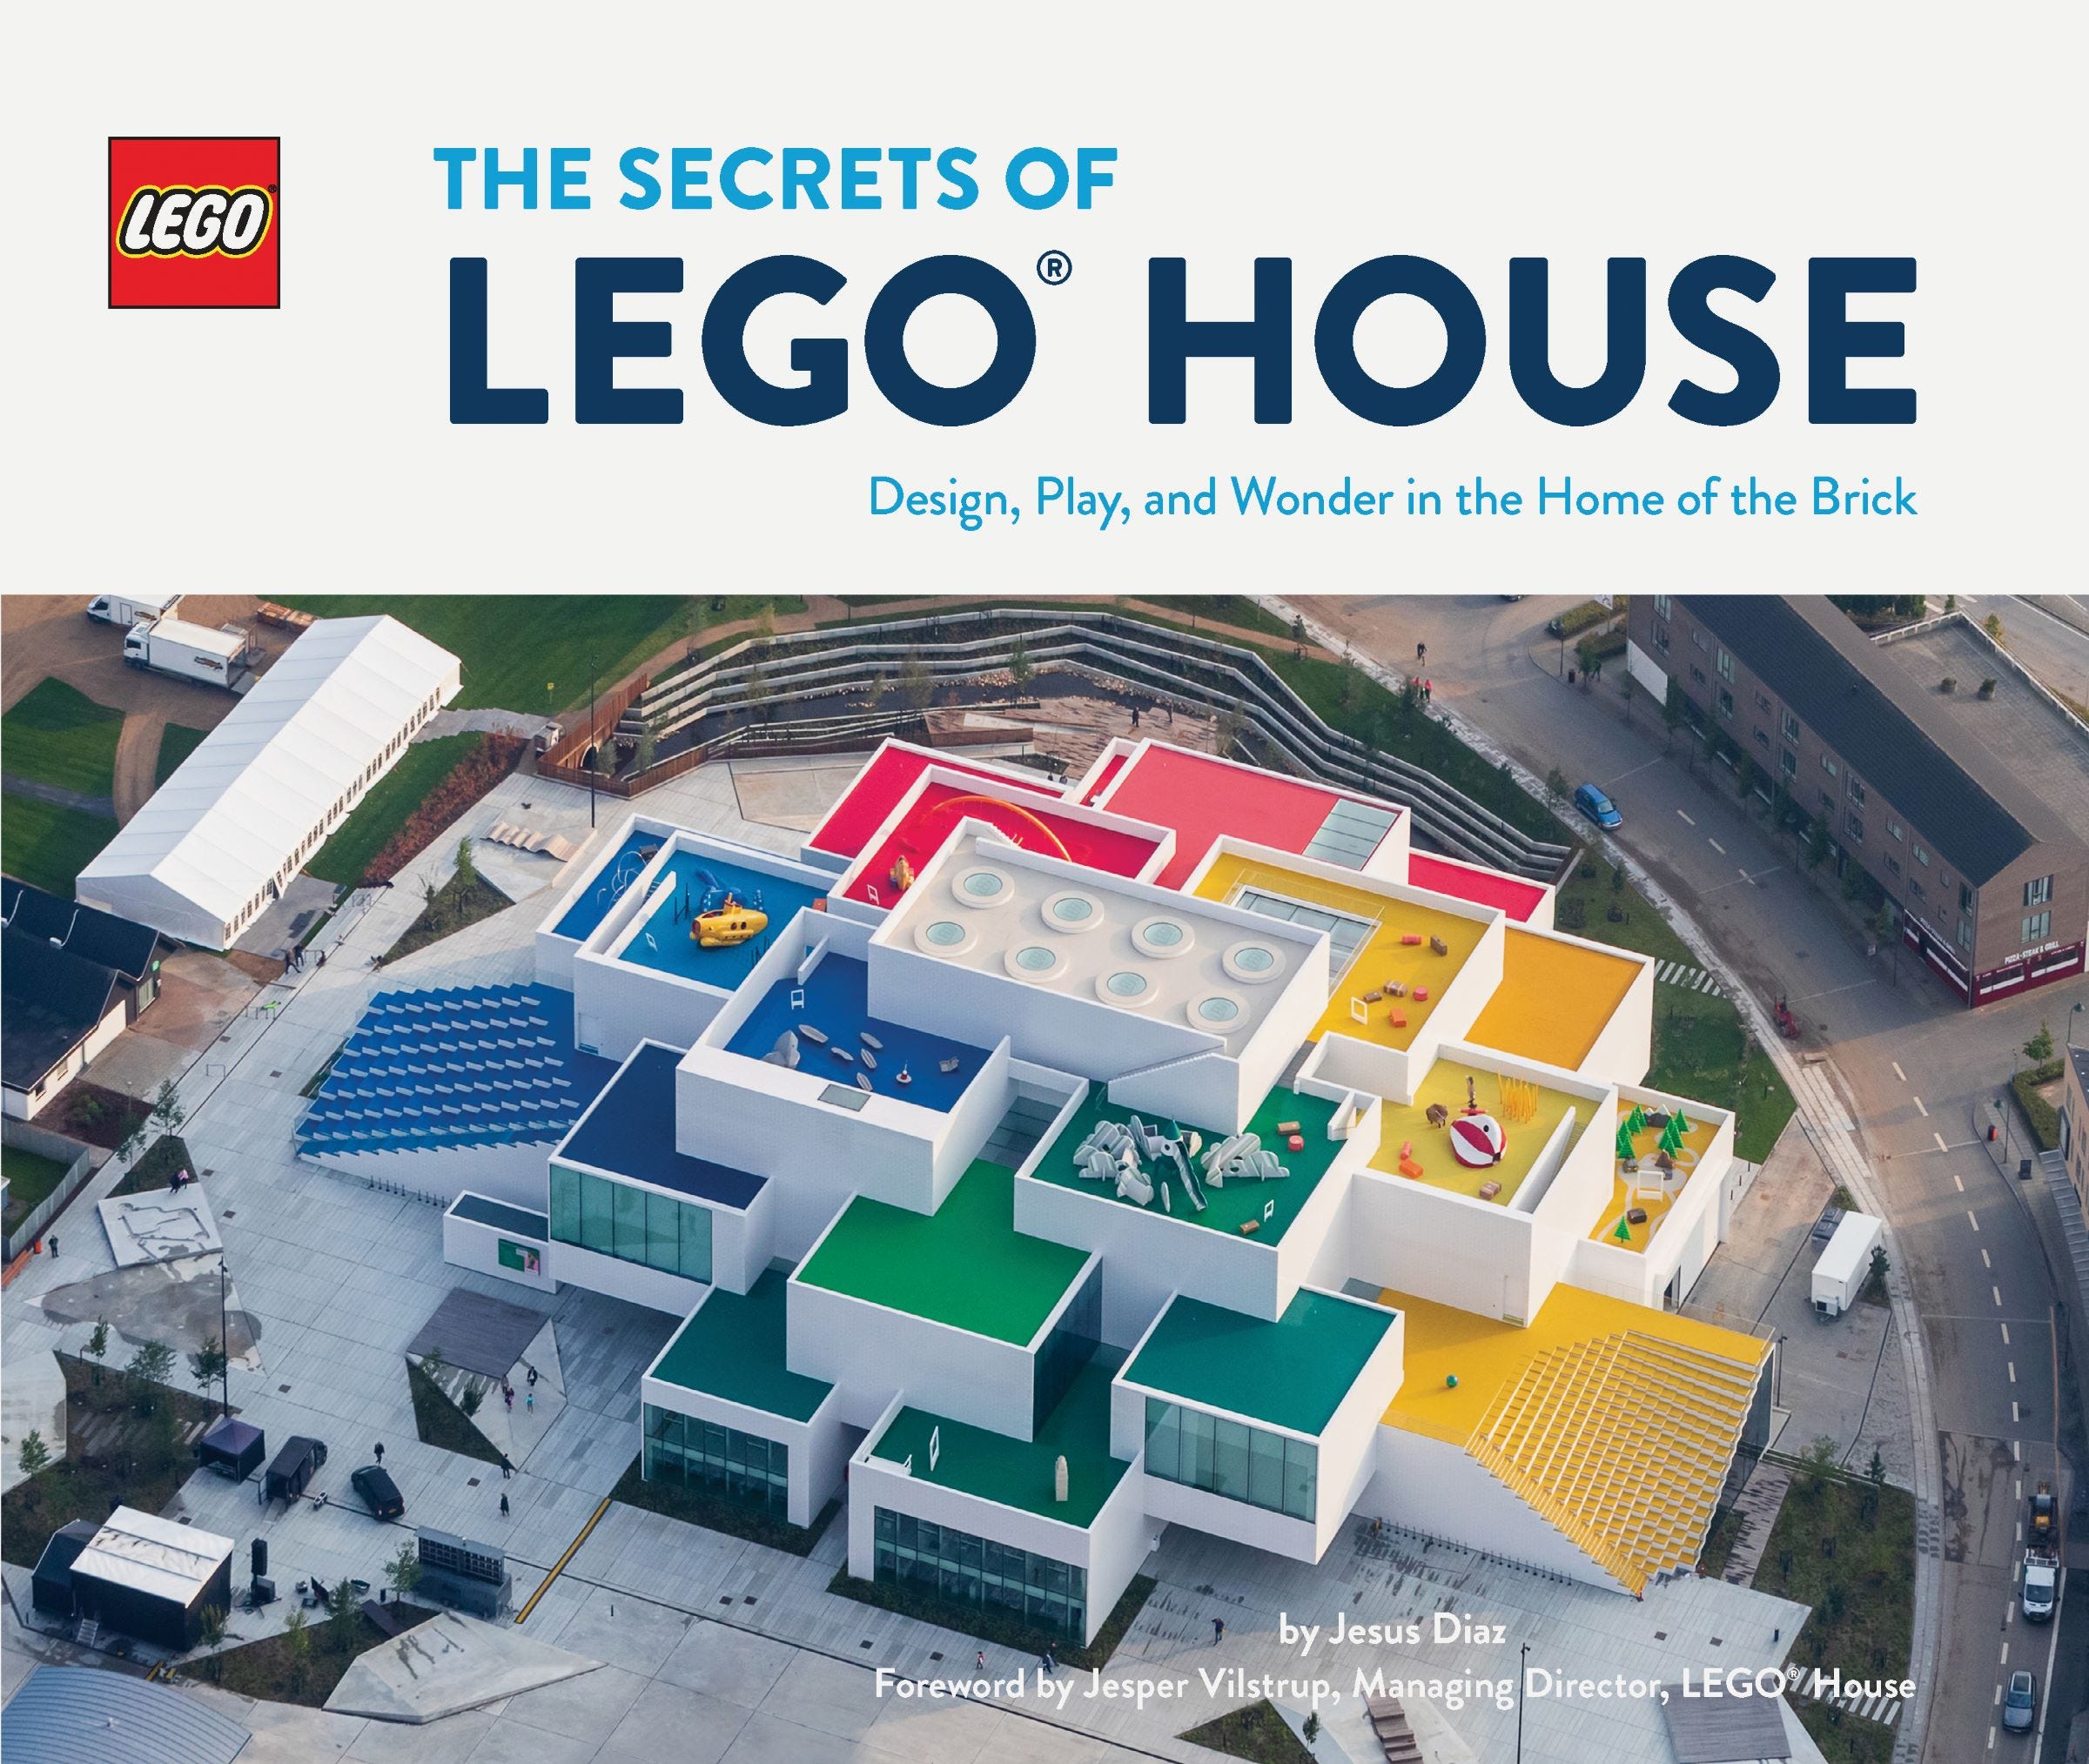 The Secrets of LEGO® House